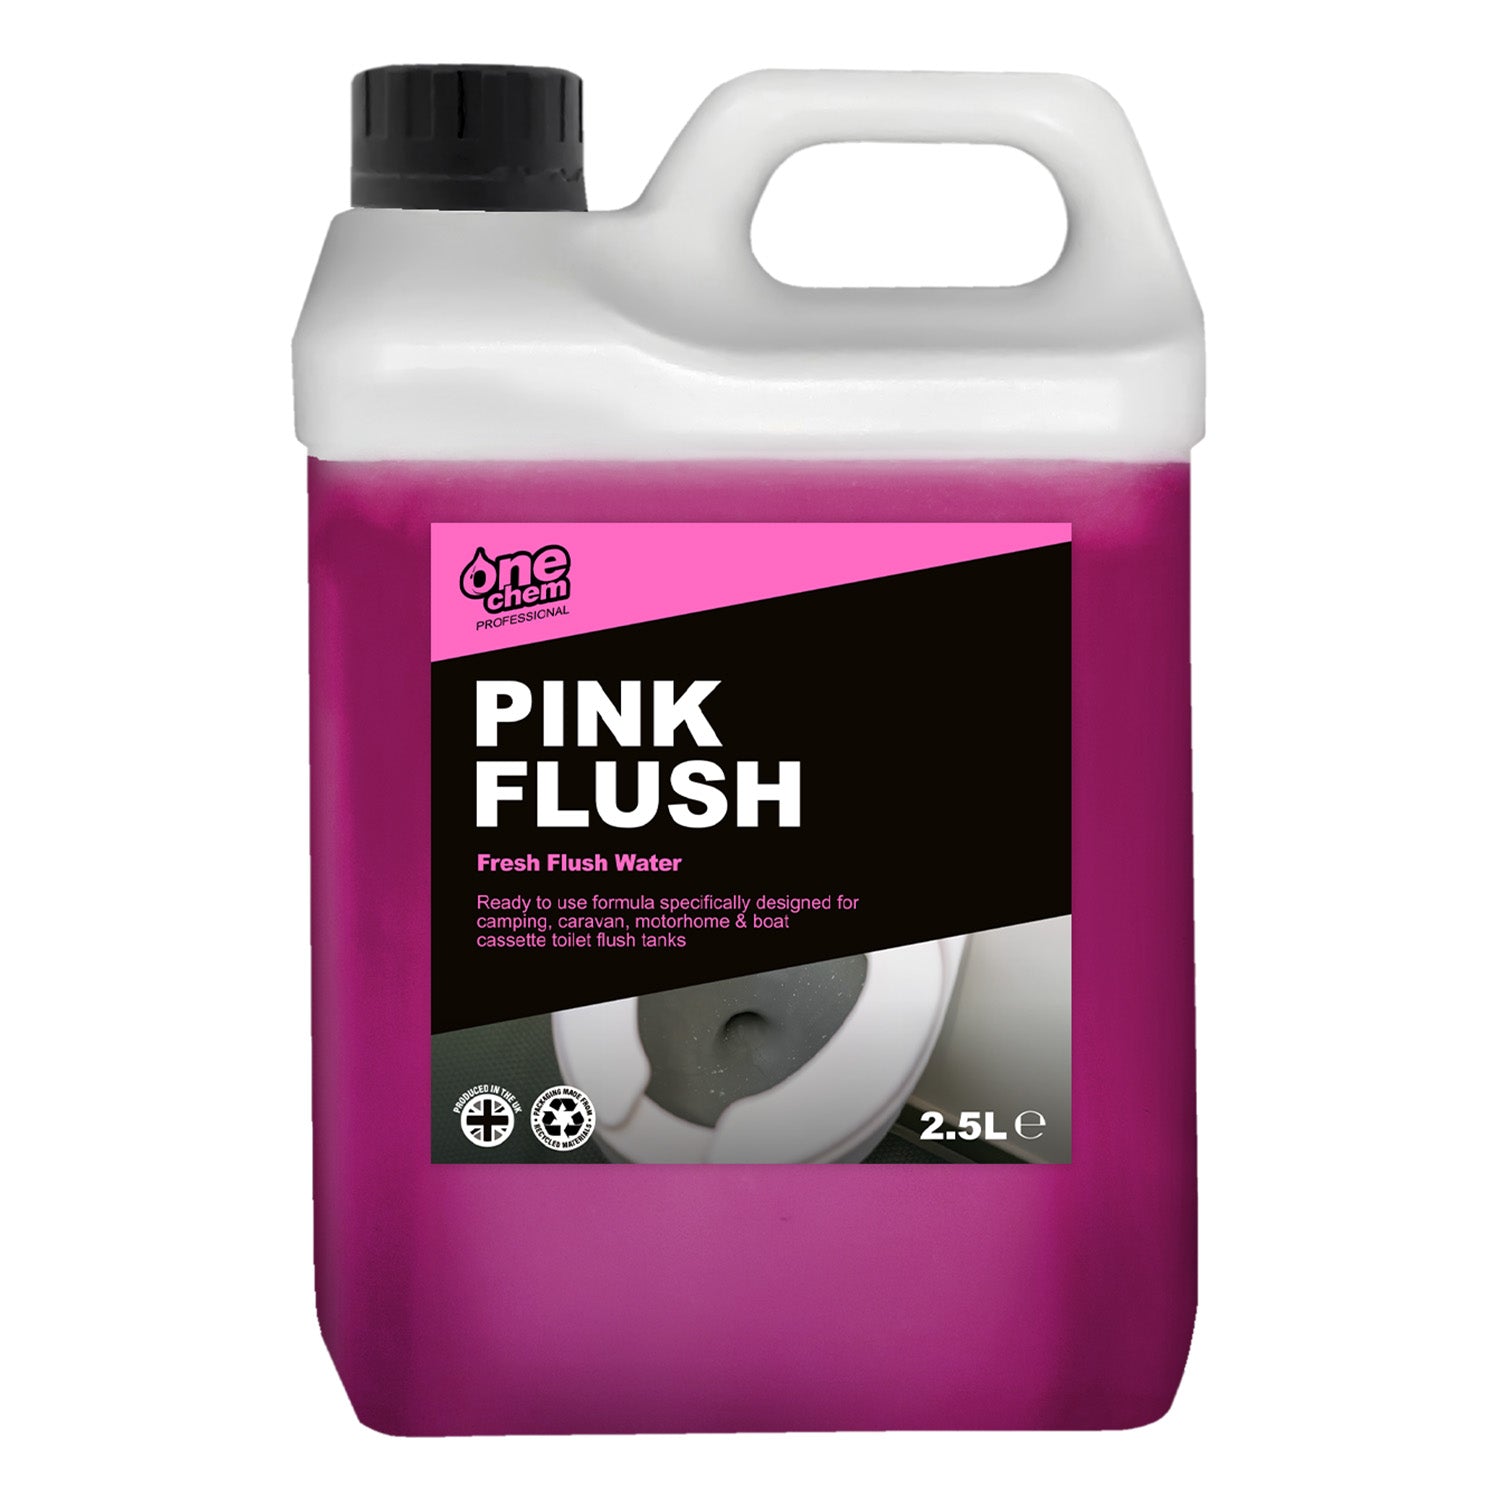 One Chem Professional Toilet Cleaner Pink Flush Fluid, 2.5 Litre